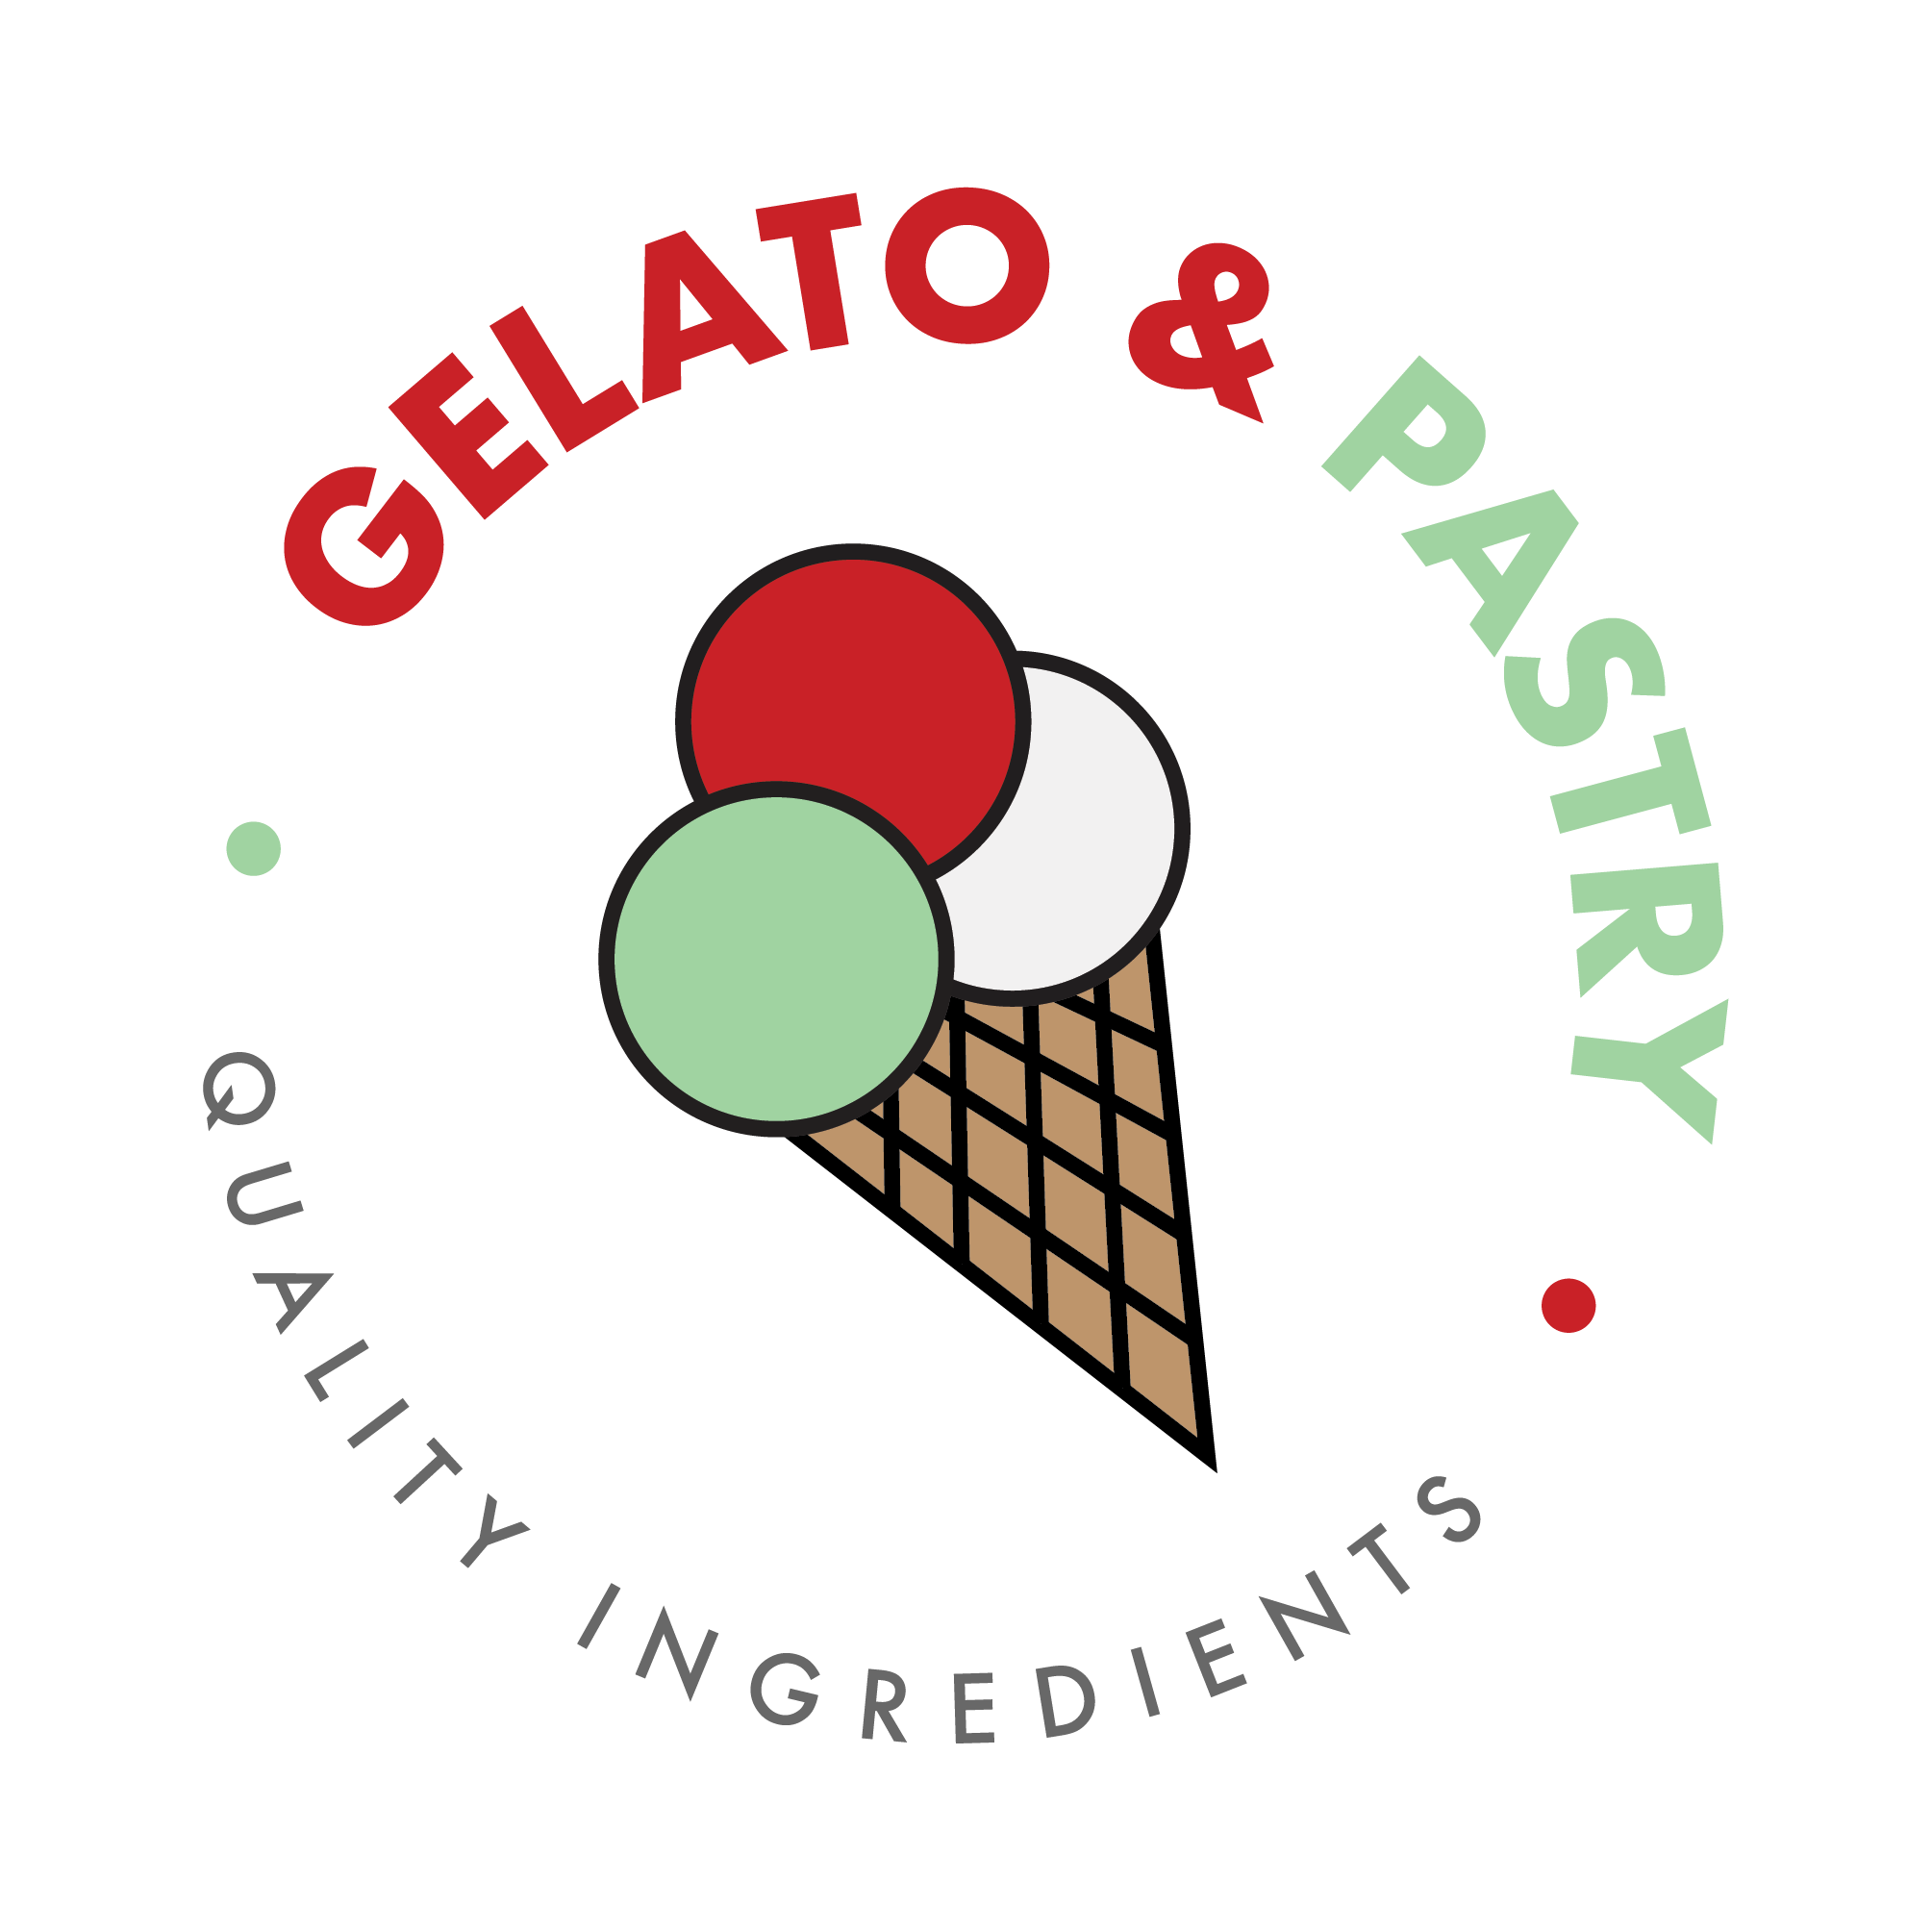 Gelato and Pastry